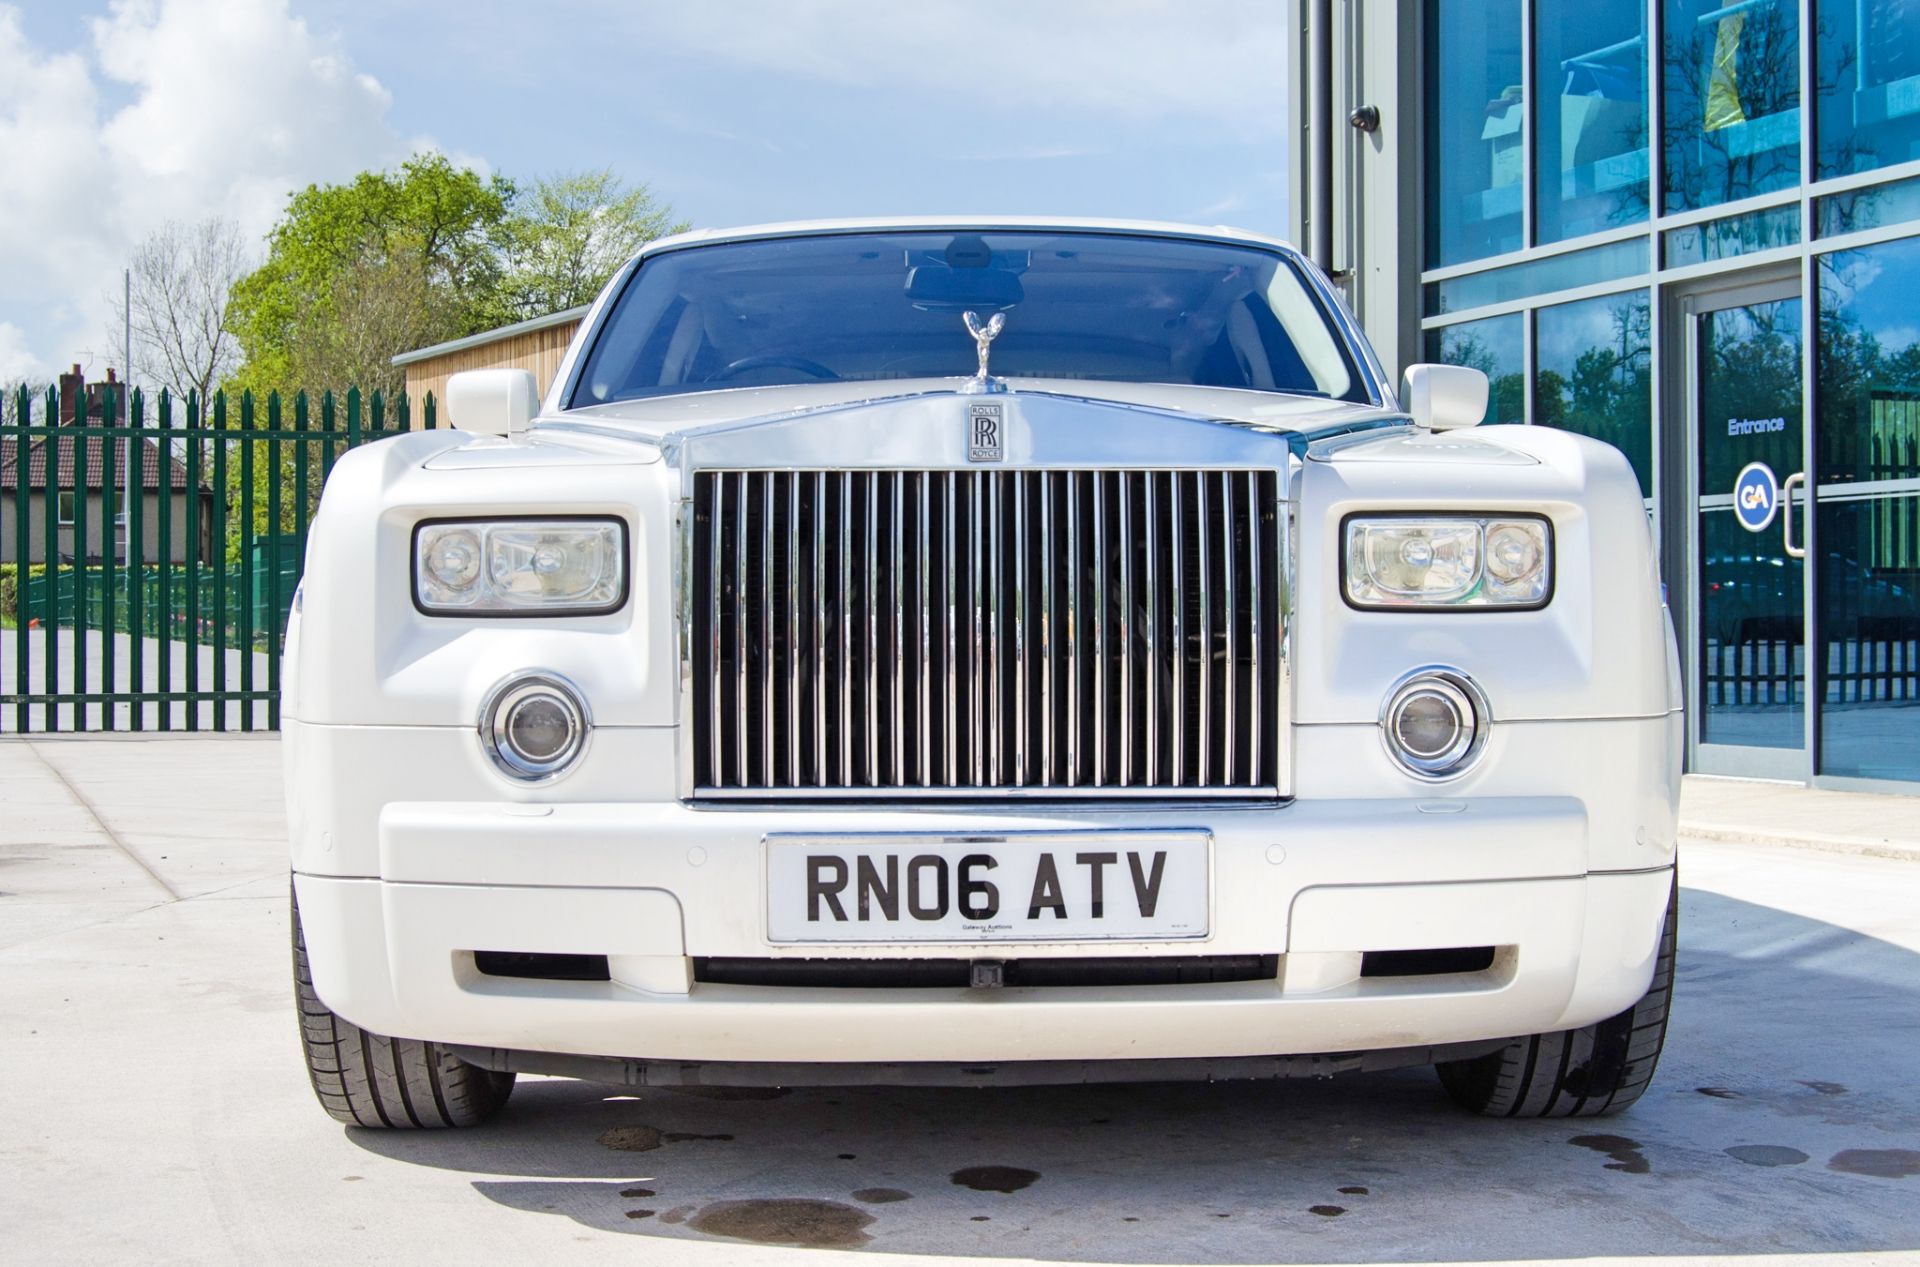 Rolls Royce Phantom 6749cc V12 Auto 4 door saloon car Registration Number: RN06 ATV Date of - Image 9 of 52